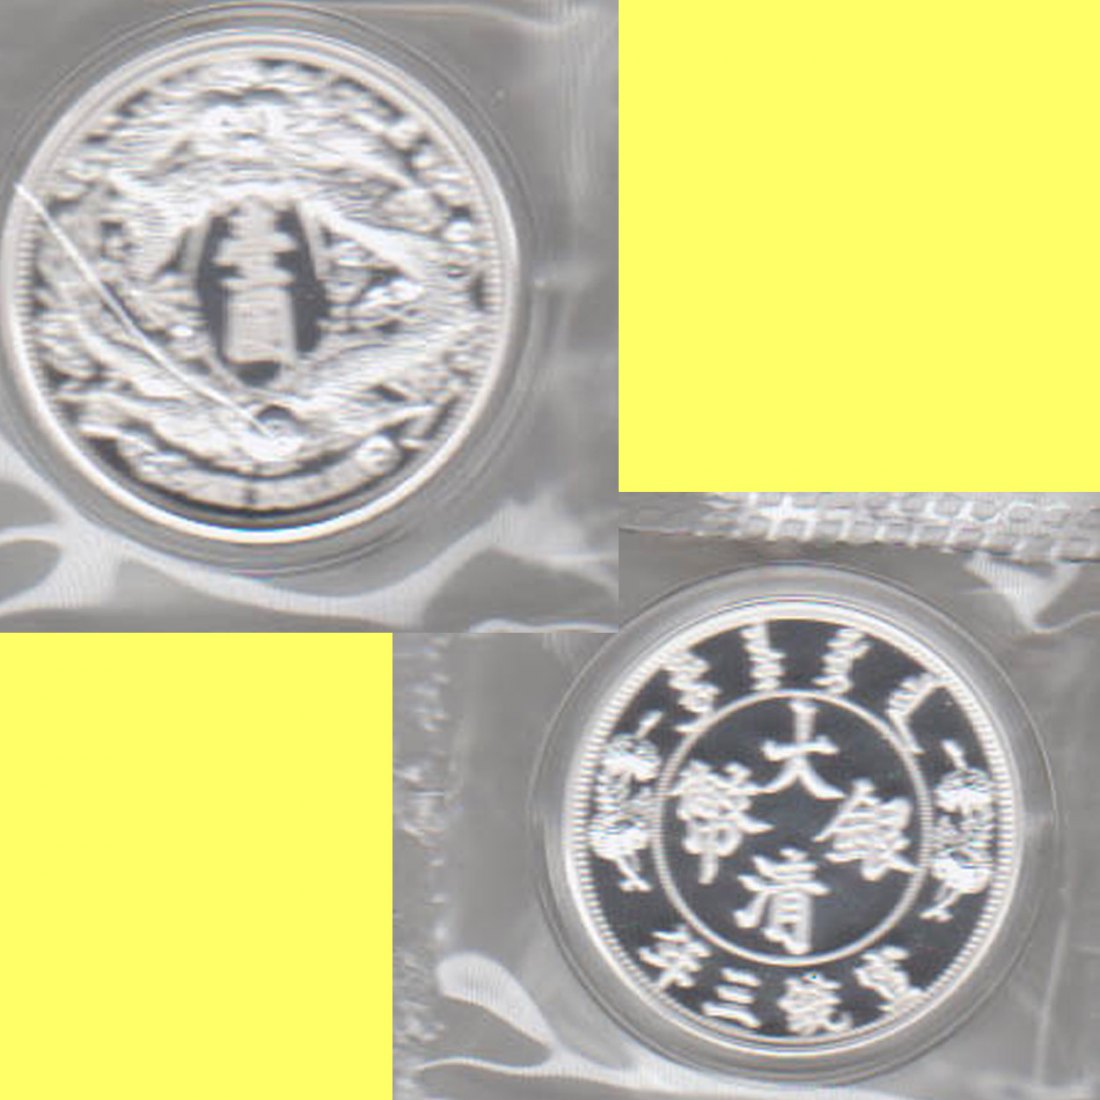  China Silbermünze *Long Whiskered Dragon Dollar* 2019 PP High Relief 1oz Silber nur 888Stück!   